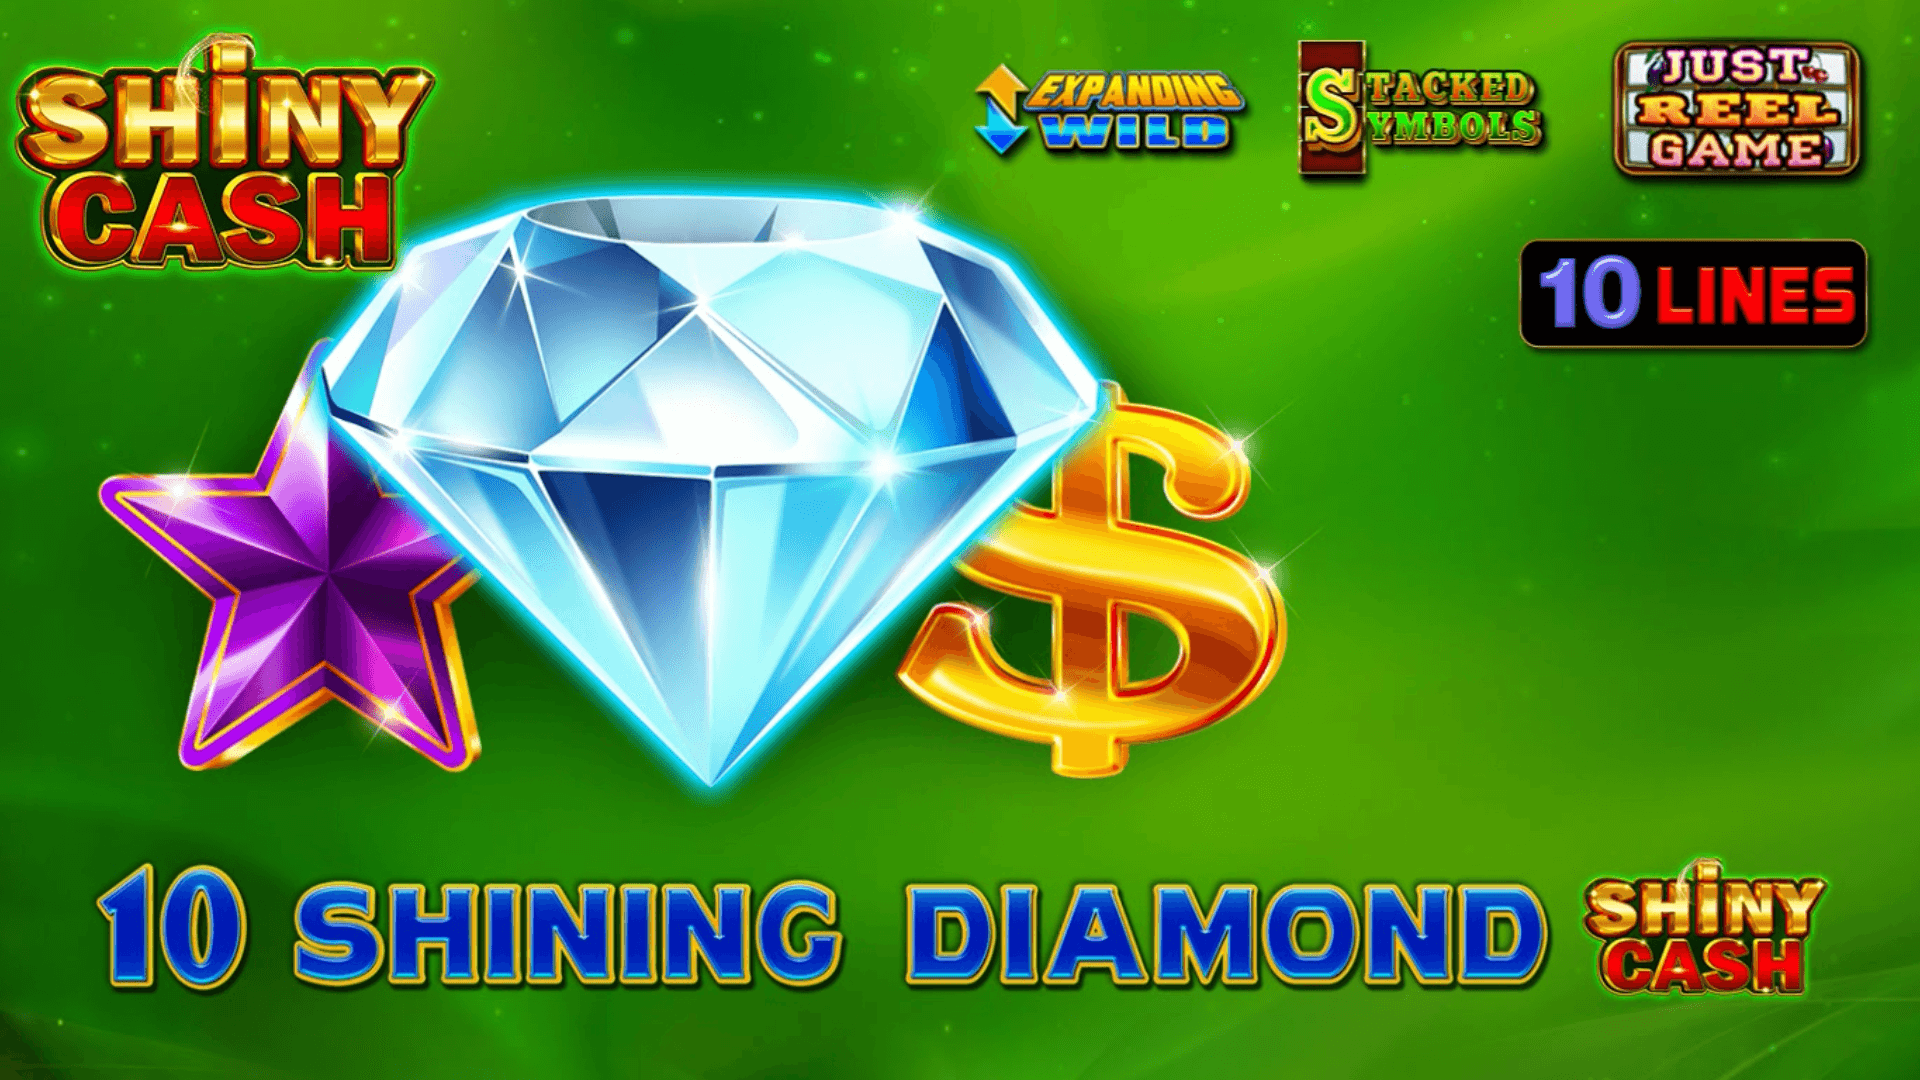 egt games general series bonus prize general 10 shining diamond shiny cash